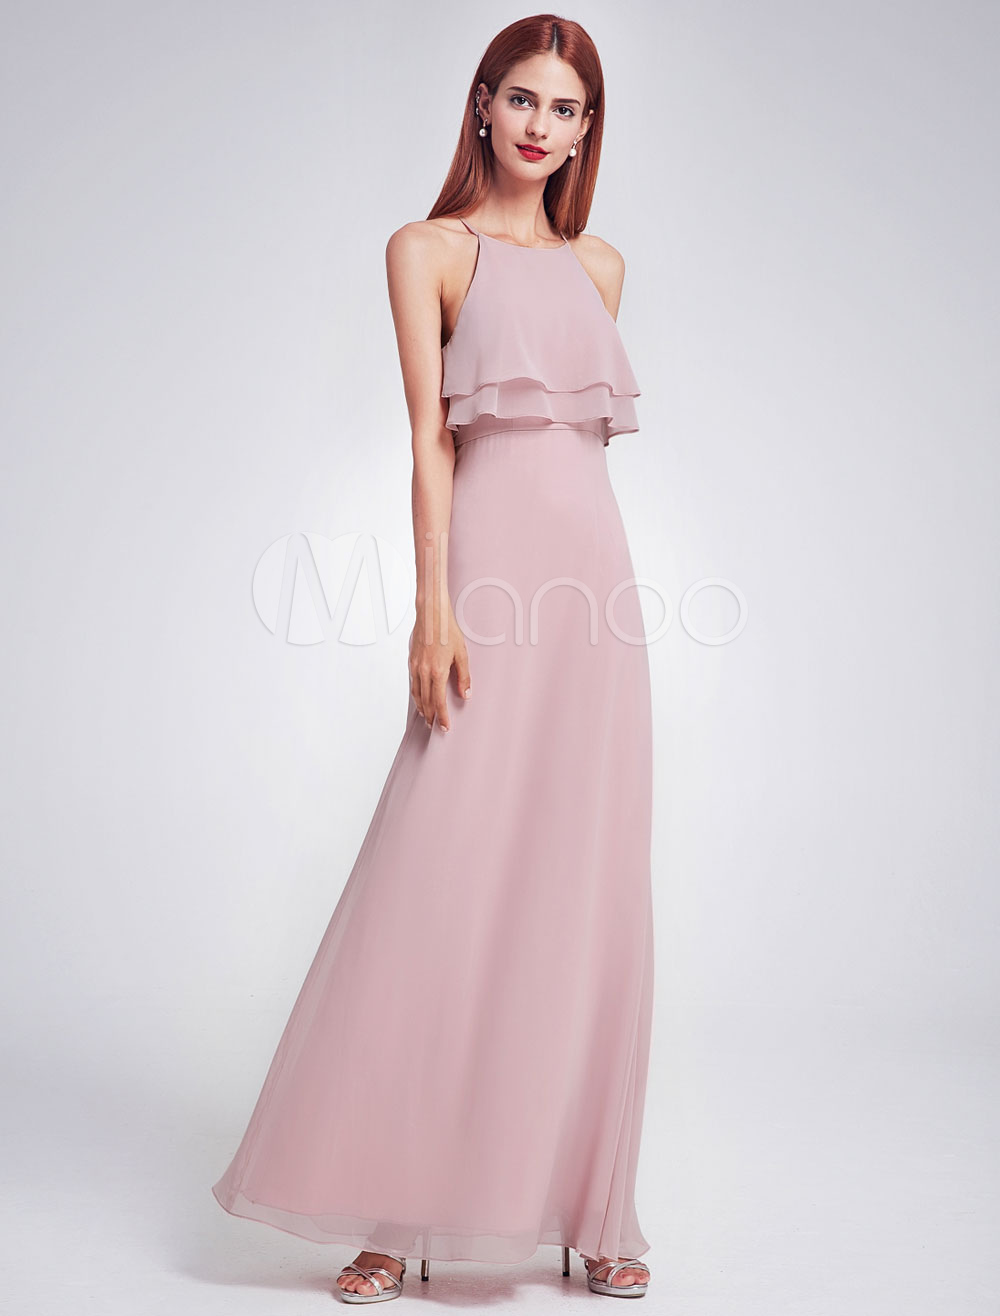 cameo pink bridesmaid dress